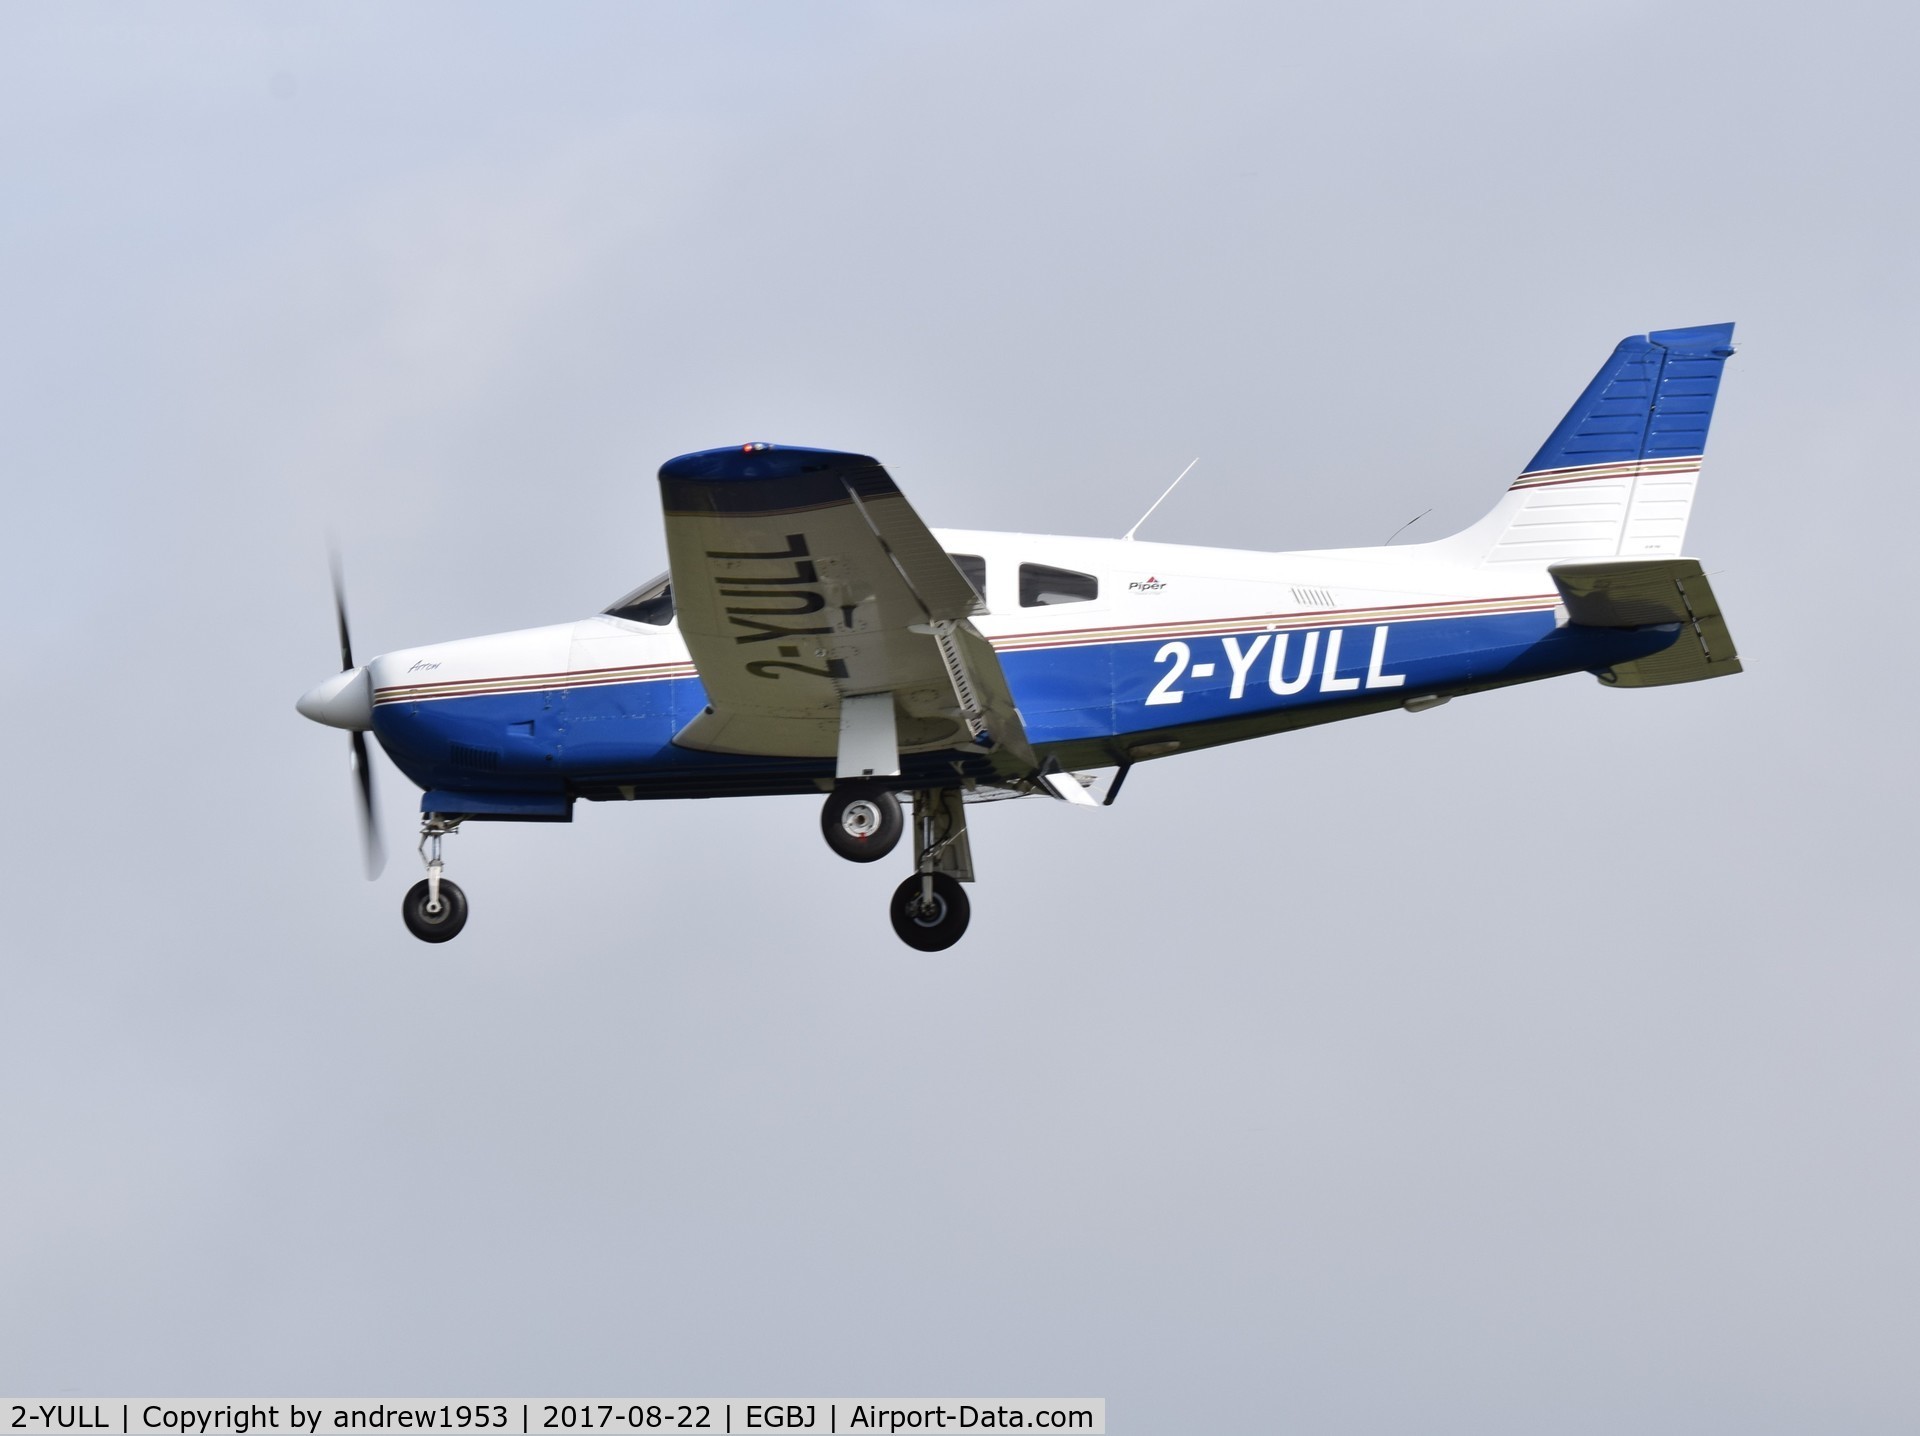 2-YULL, 2005 Piper PA-28R-201 Cherokee Arrow III C/N 2844118, 2-YULL landing at Gloucestershire Airport.